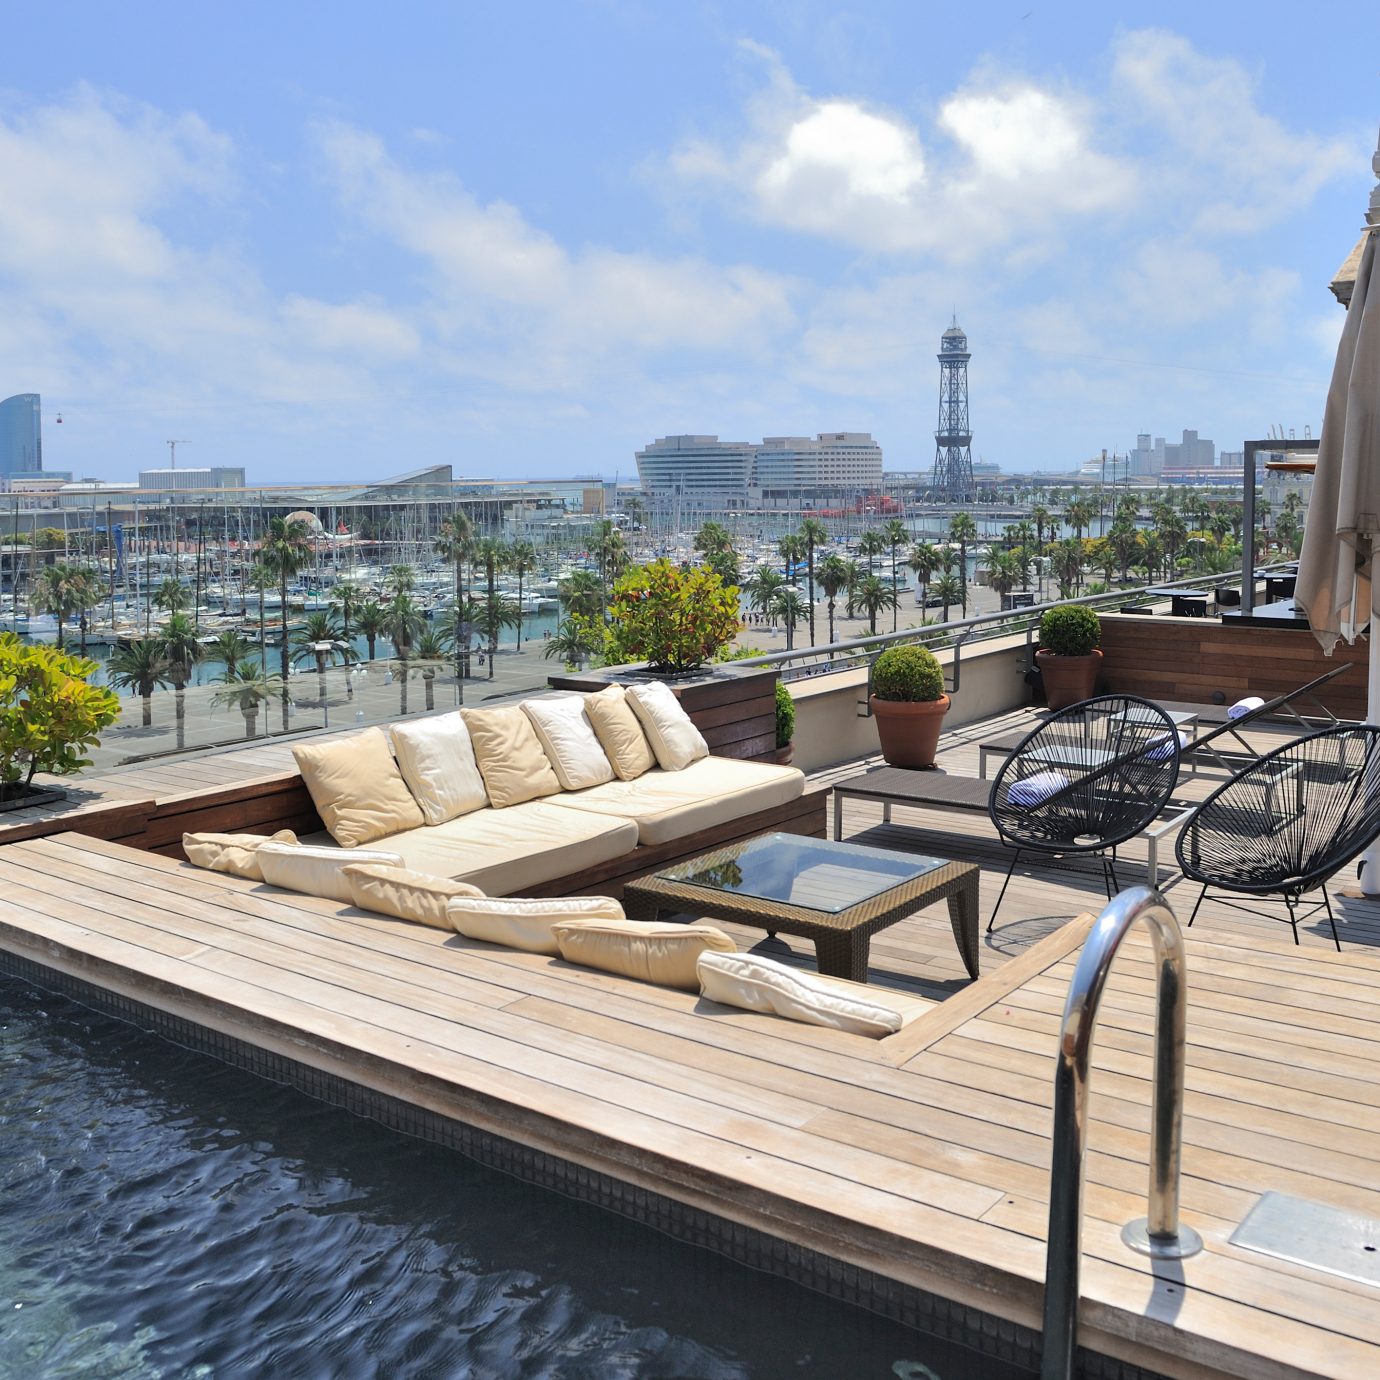 Deck Luxury Patio Pool sky property swimming pool walkway dock reflecting pool condominium waterway marina outdoor structure plaza